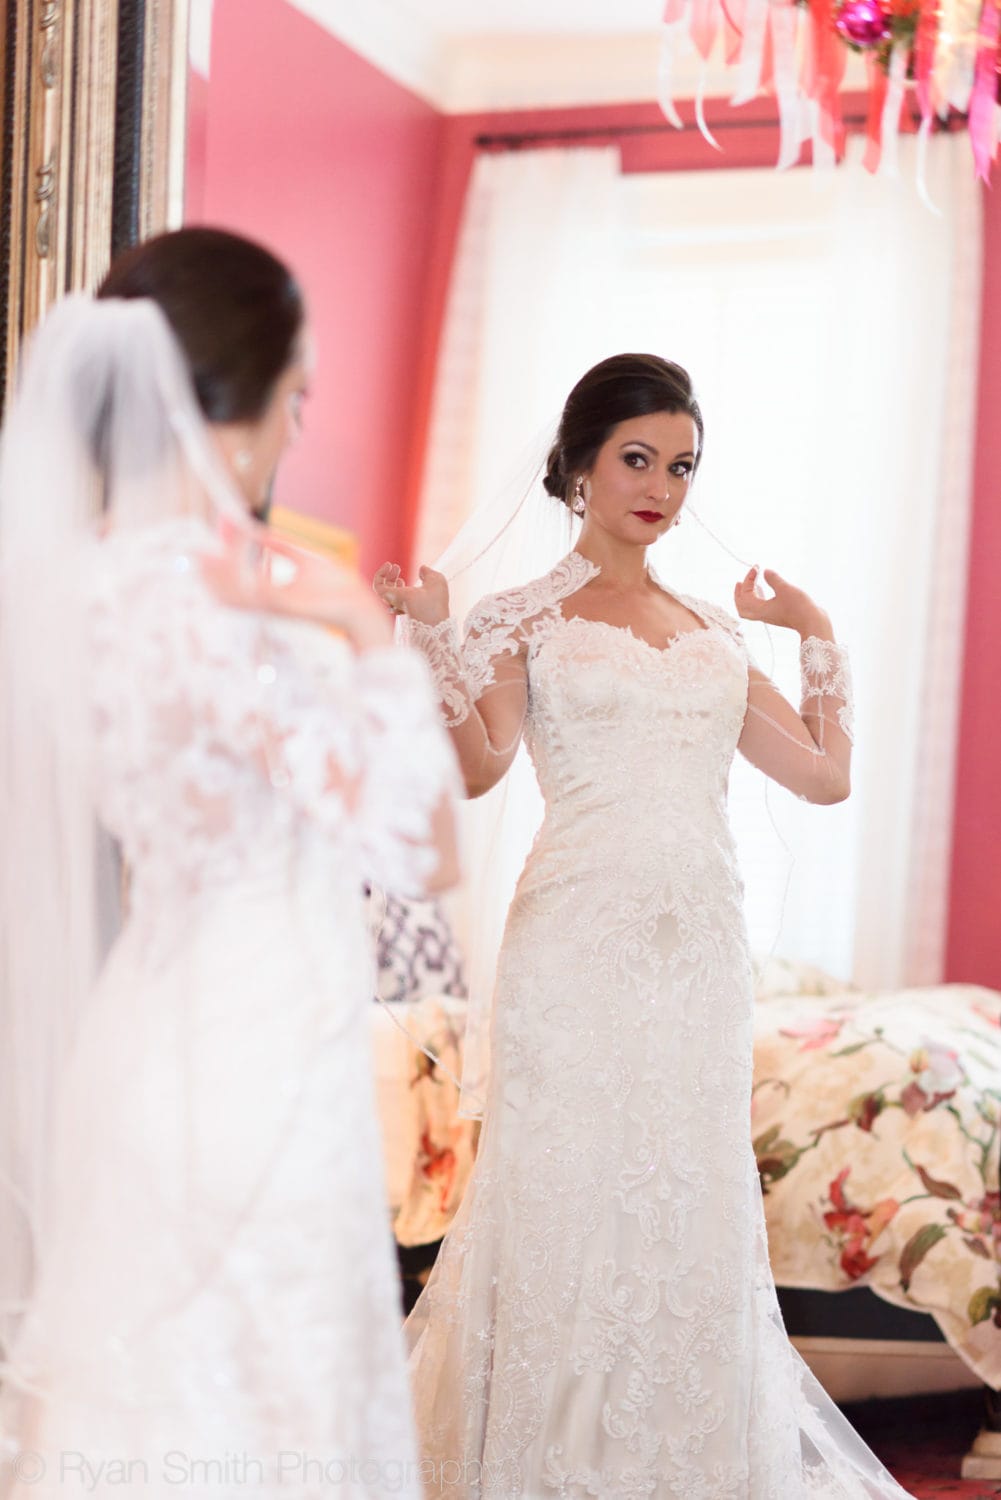 Bride adjusting her veil in the mirror - Rosewood Manor, Marion